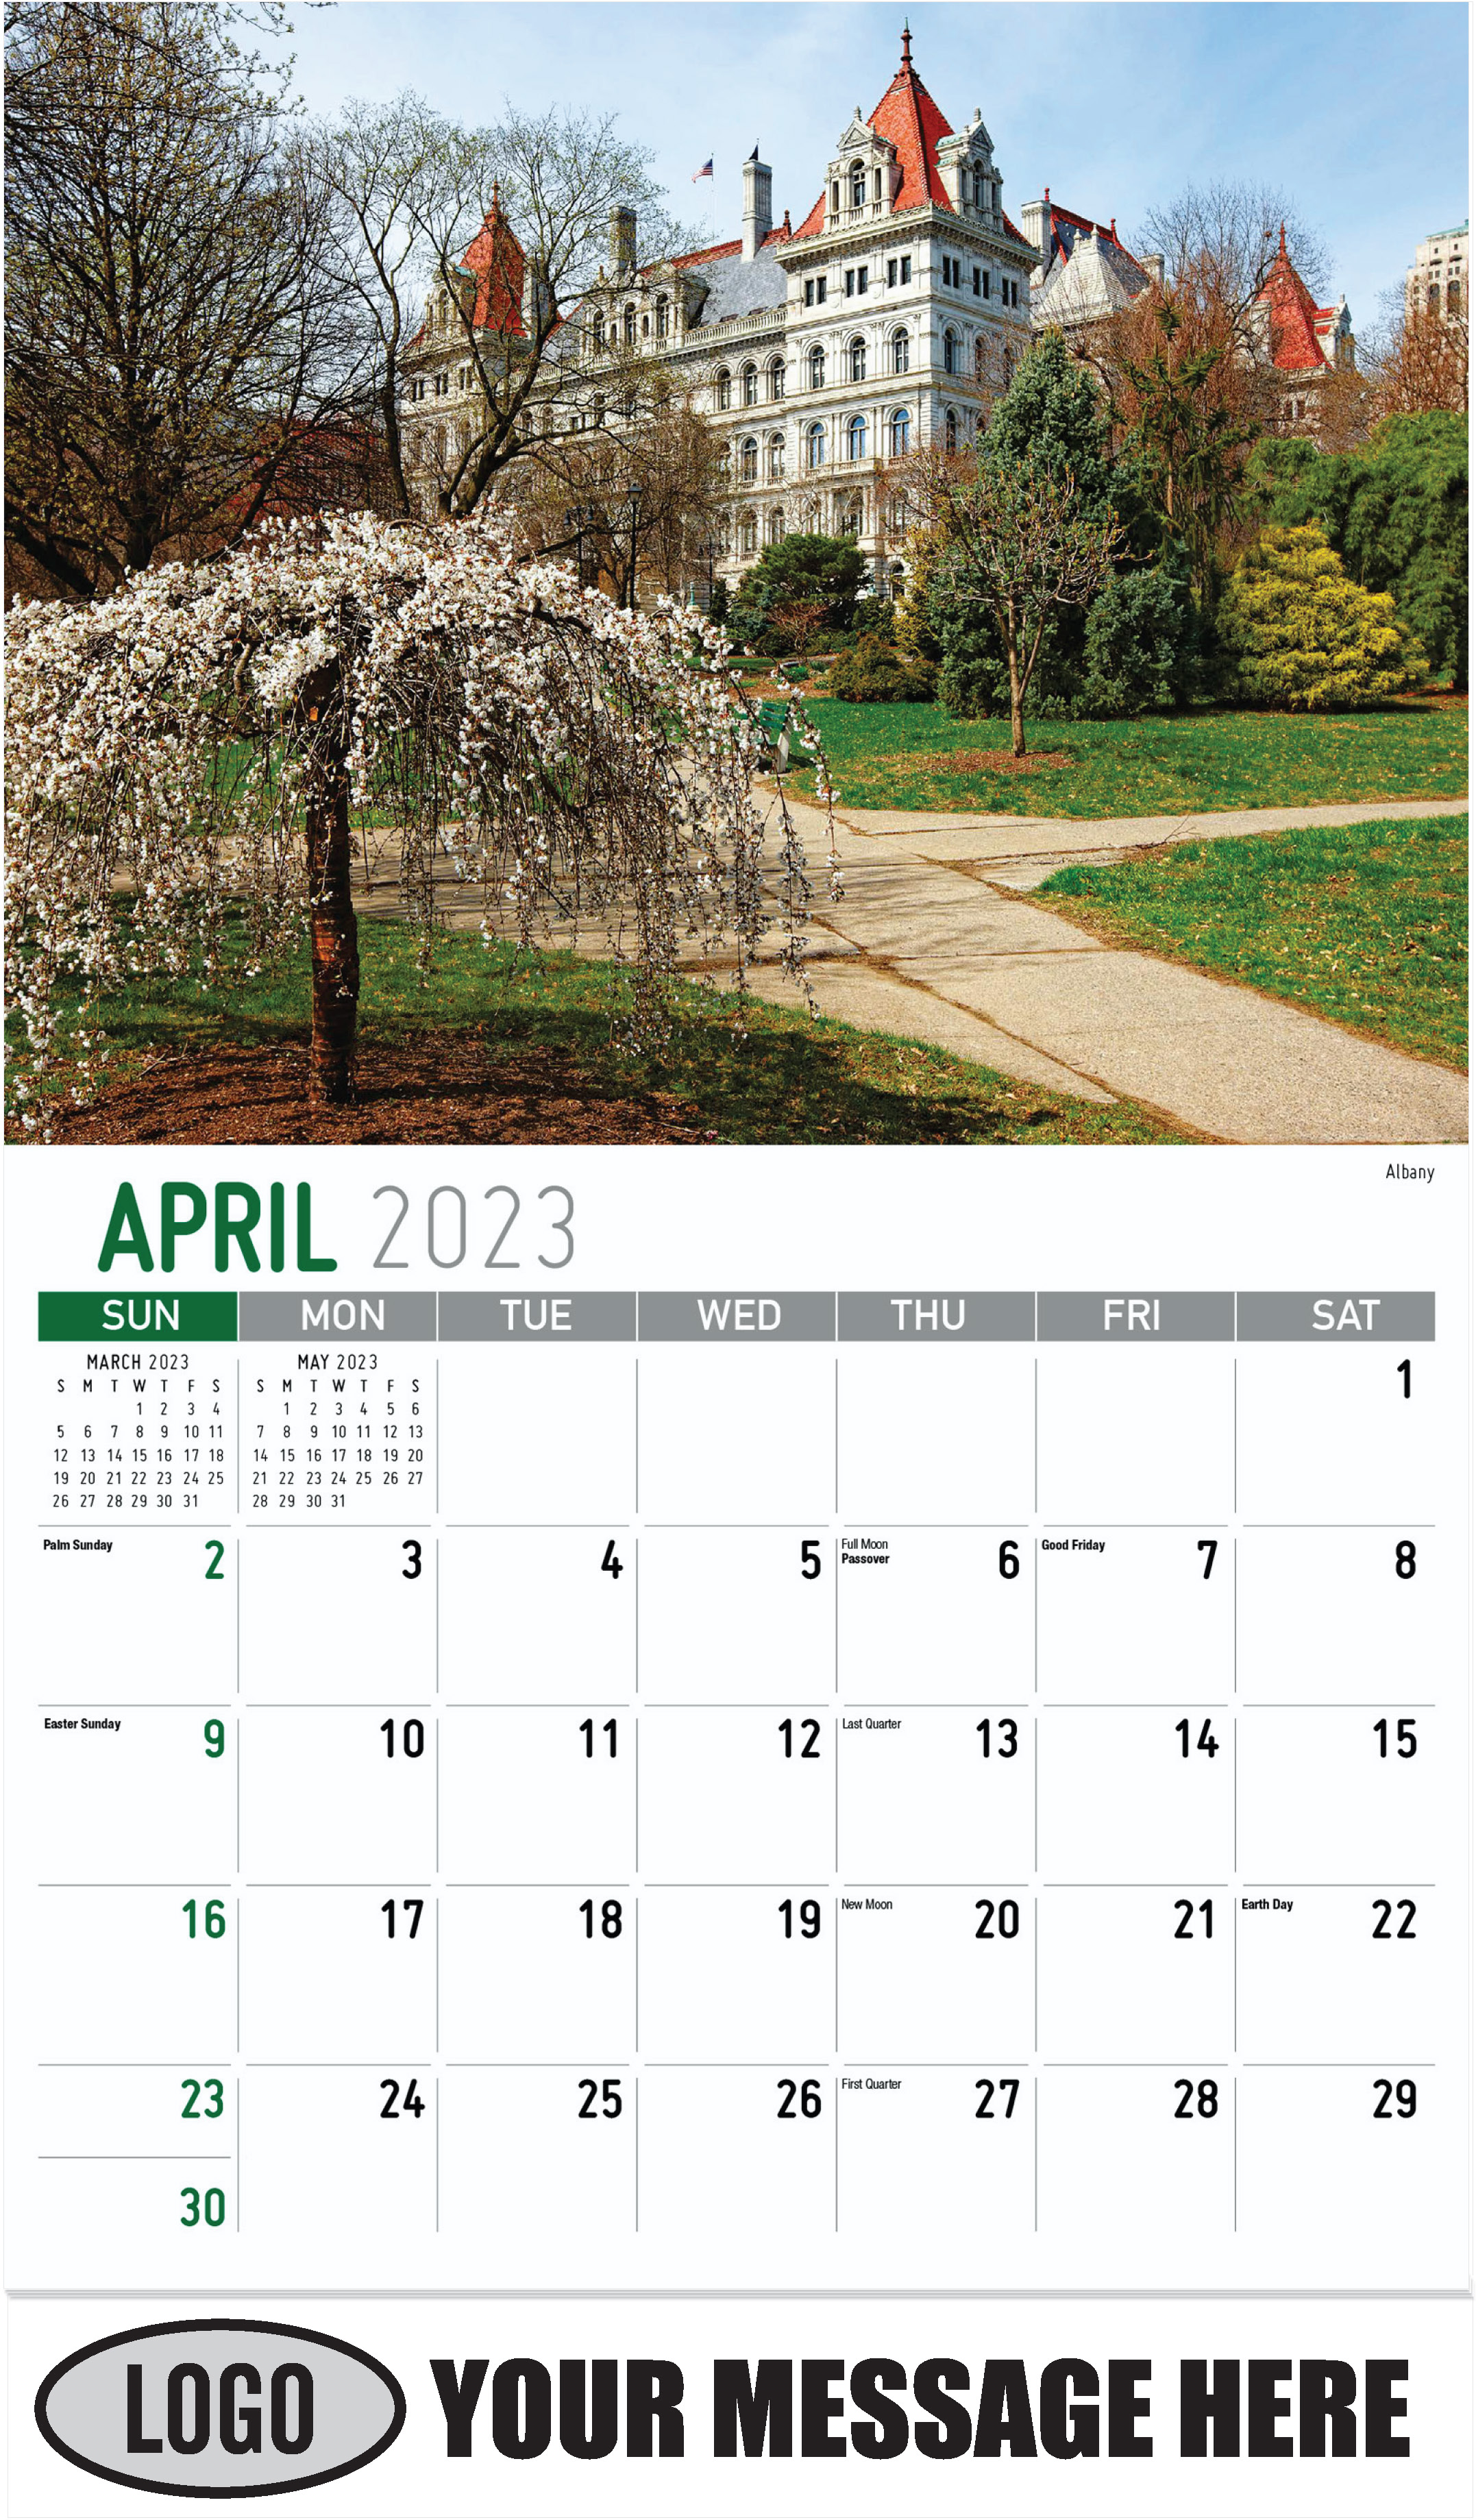 Albany - April - Scenes of New York 2023 Promotional Calendar